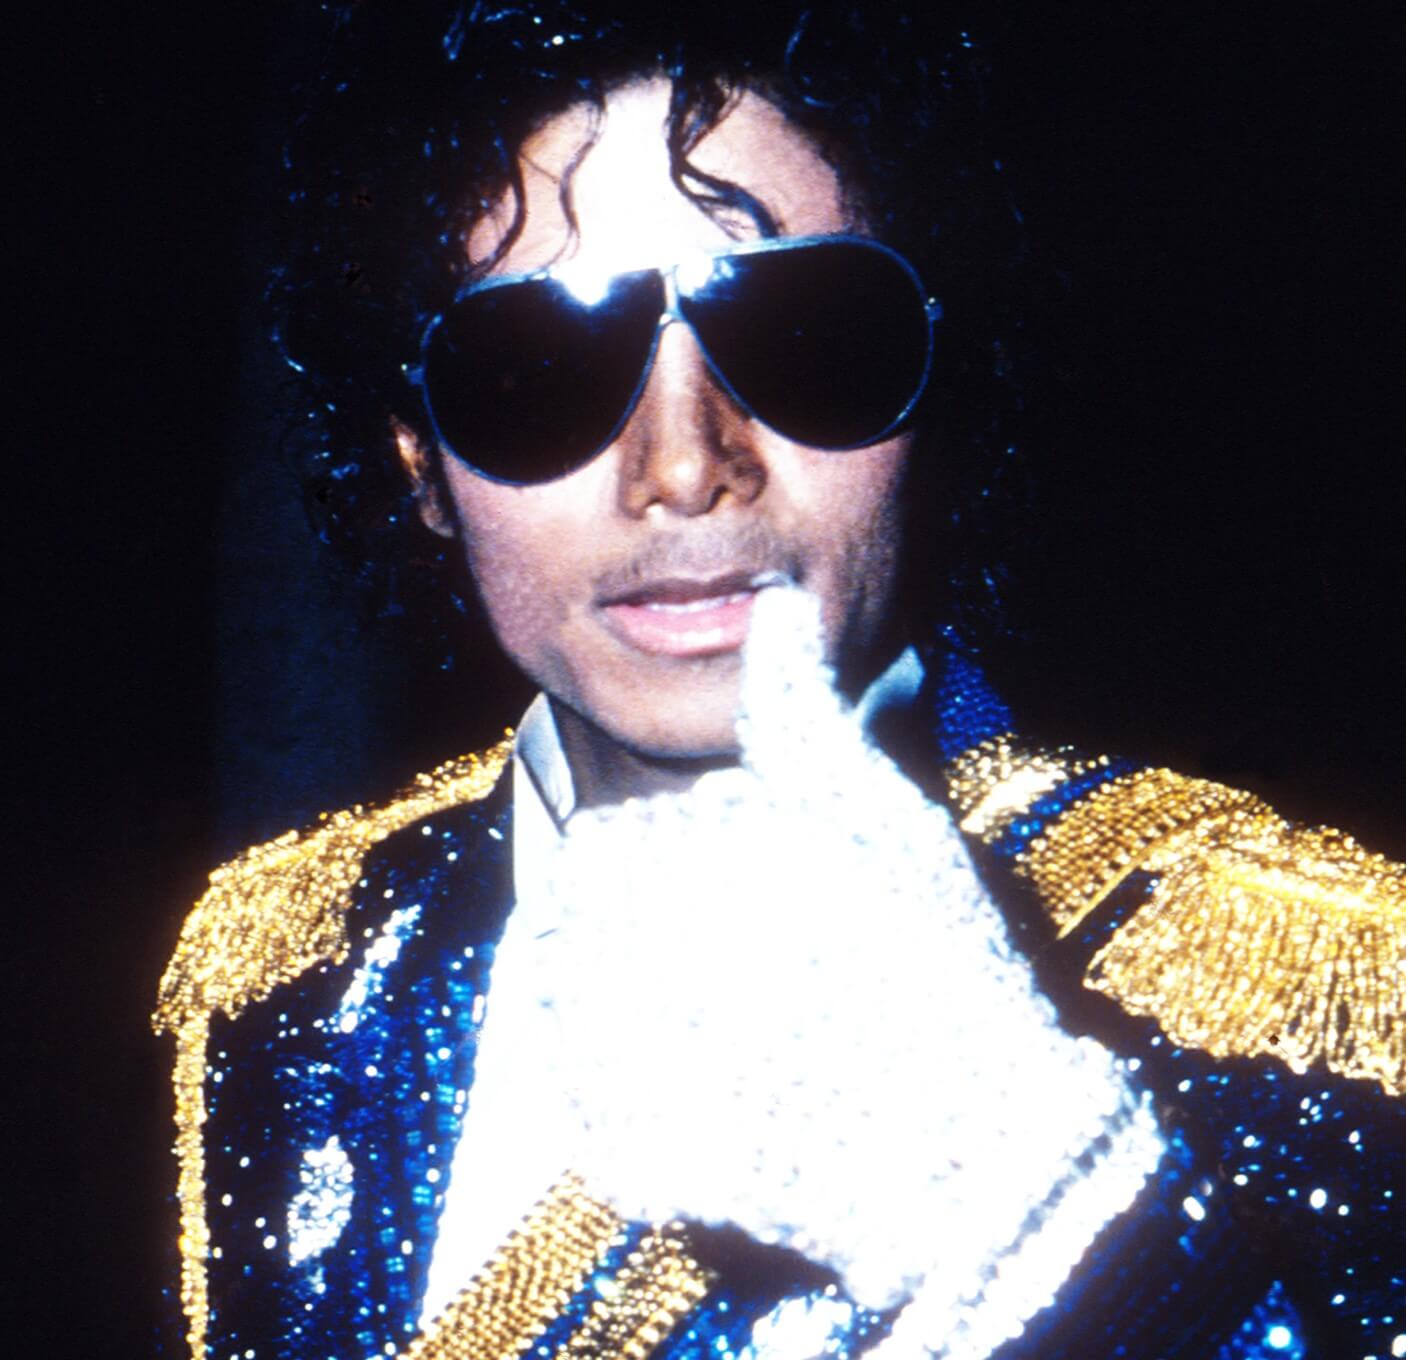 "Blood on the Dancefloor" singer Michael Jackson wearing a glove